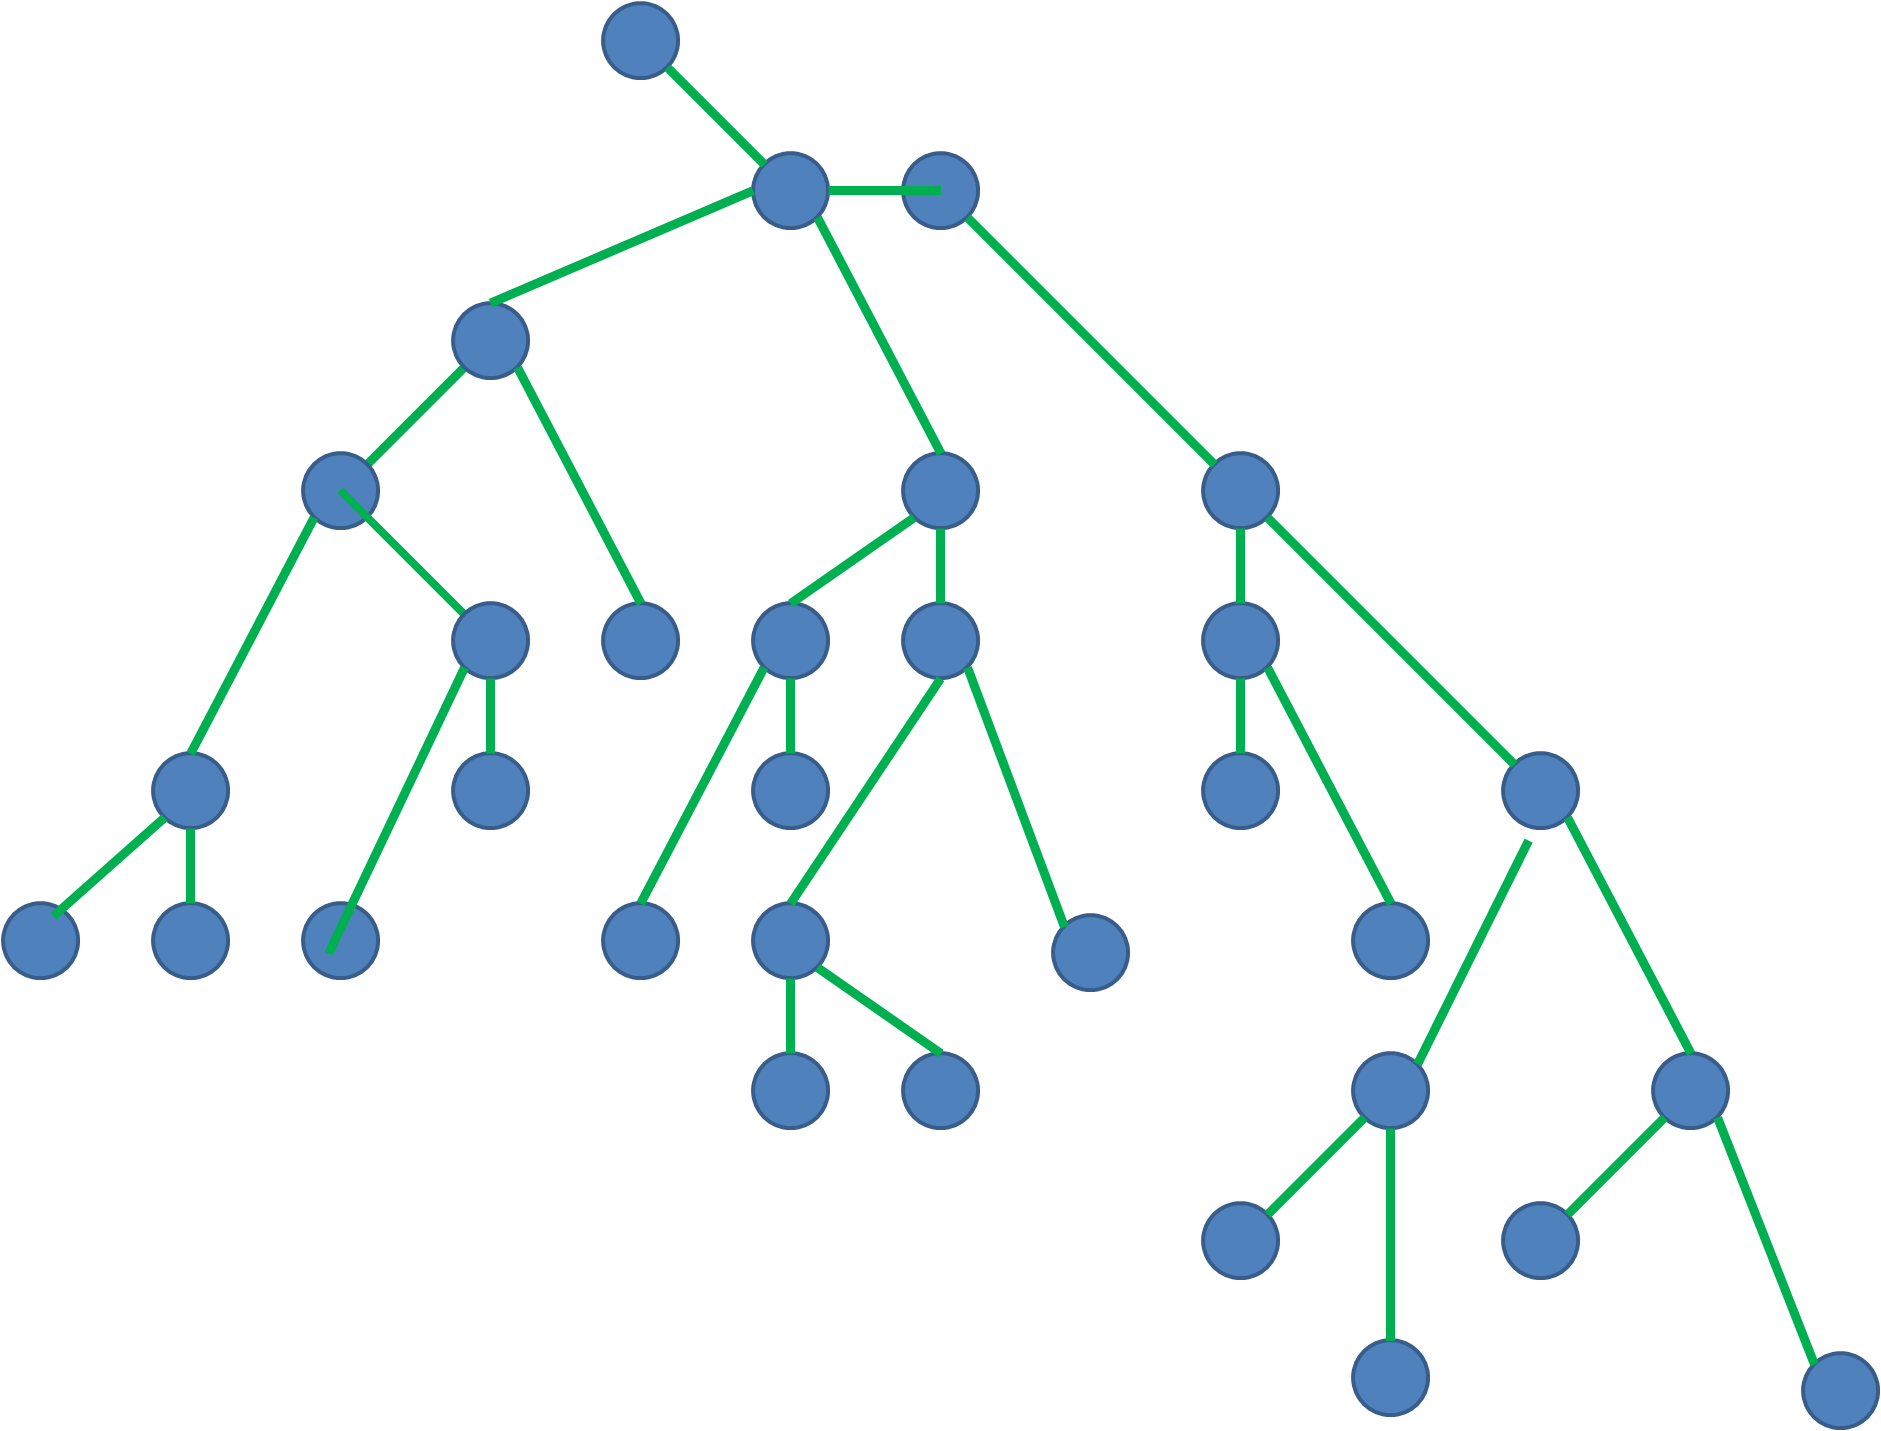 Example input graph